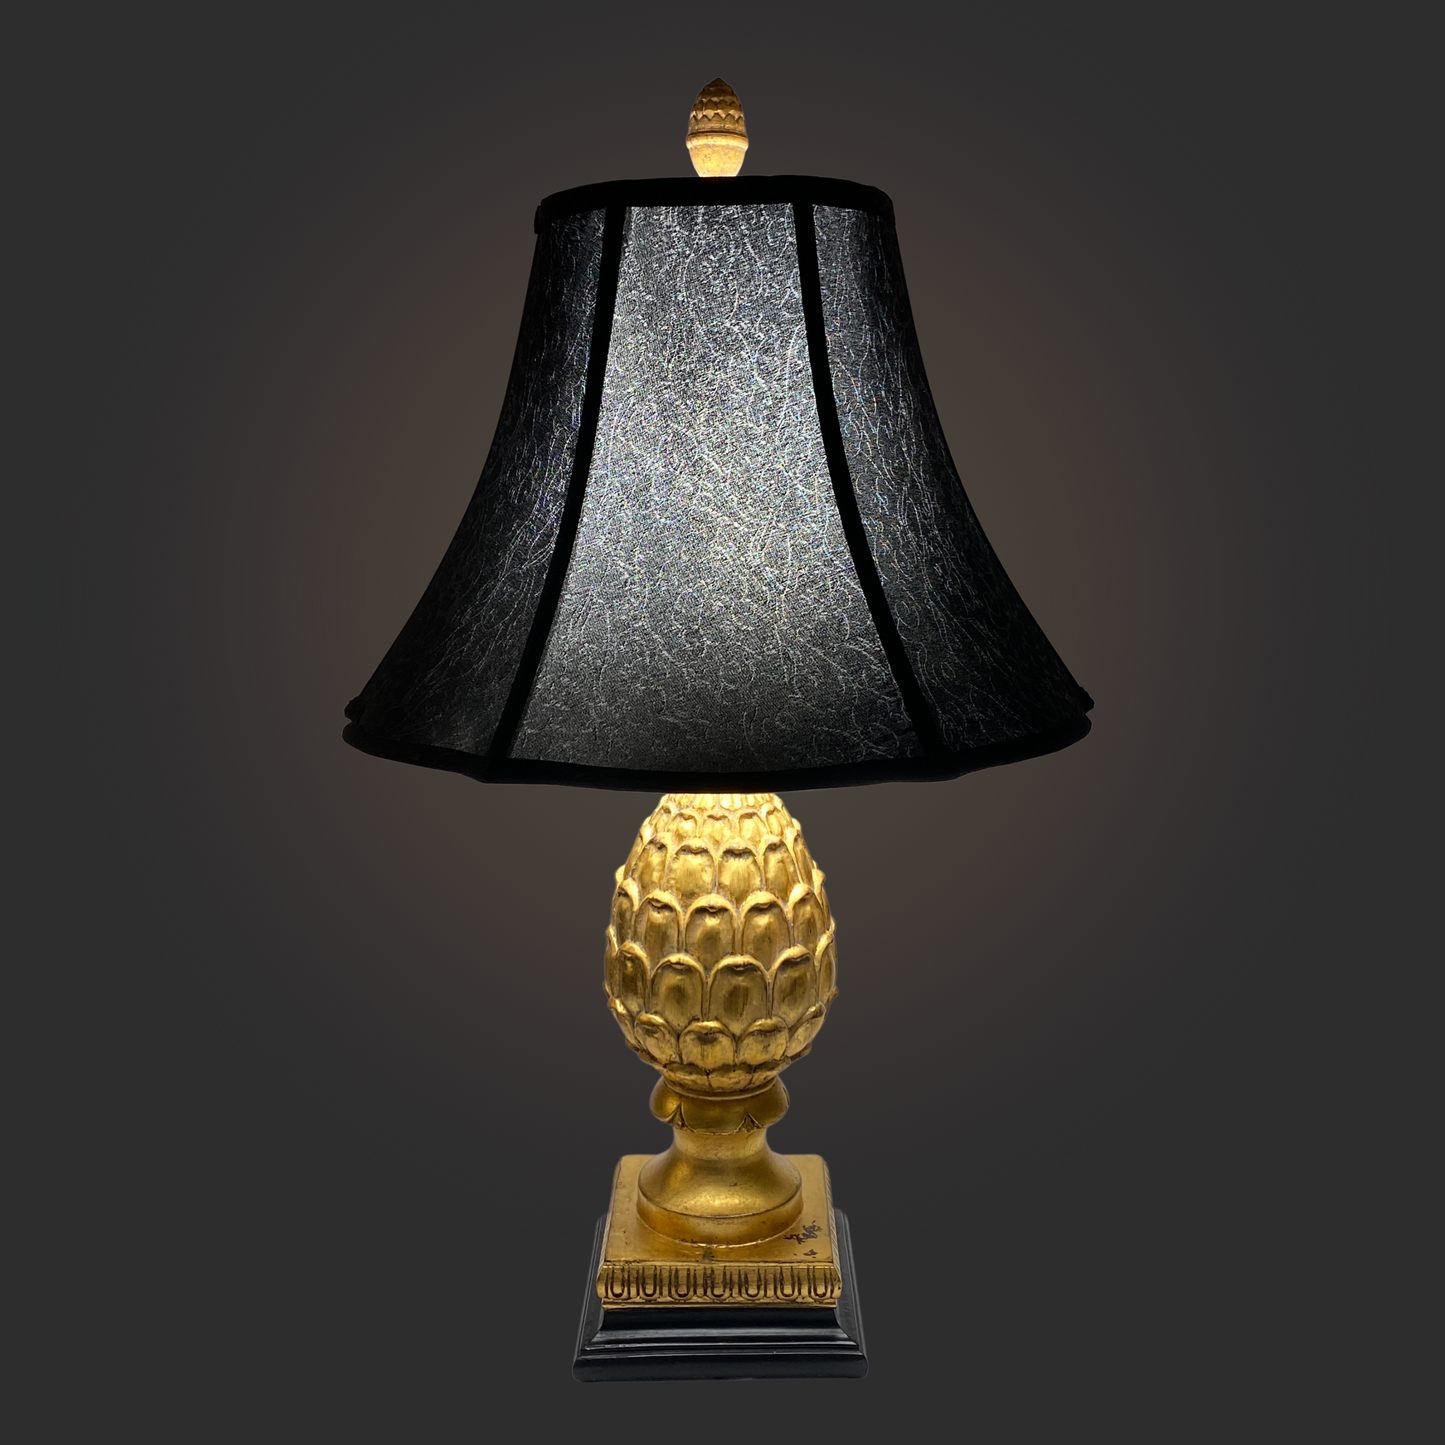 Hollywood Regency Gilt Artichoke Lamp